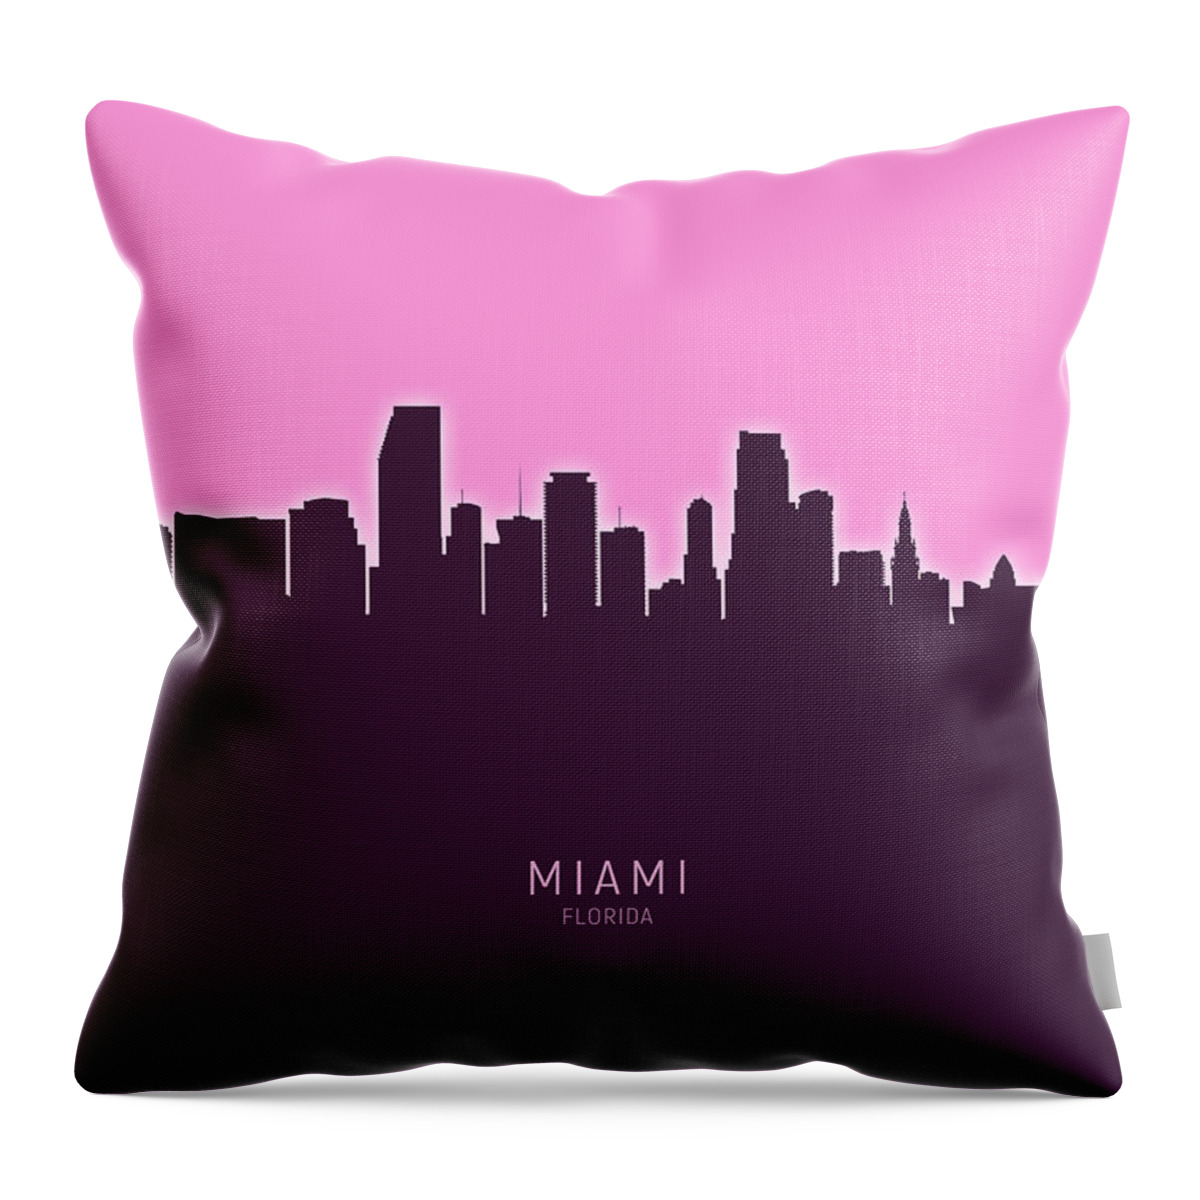 Miami Throw Pillow featuring the digital art Miami Florida Skyline #28 by Michael Tompsett